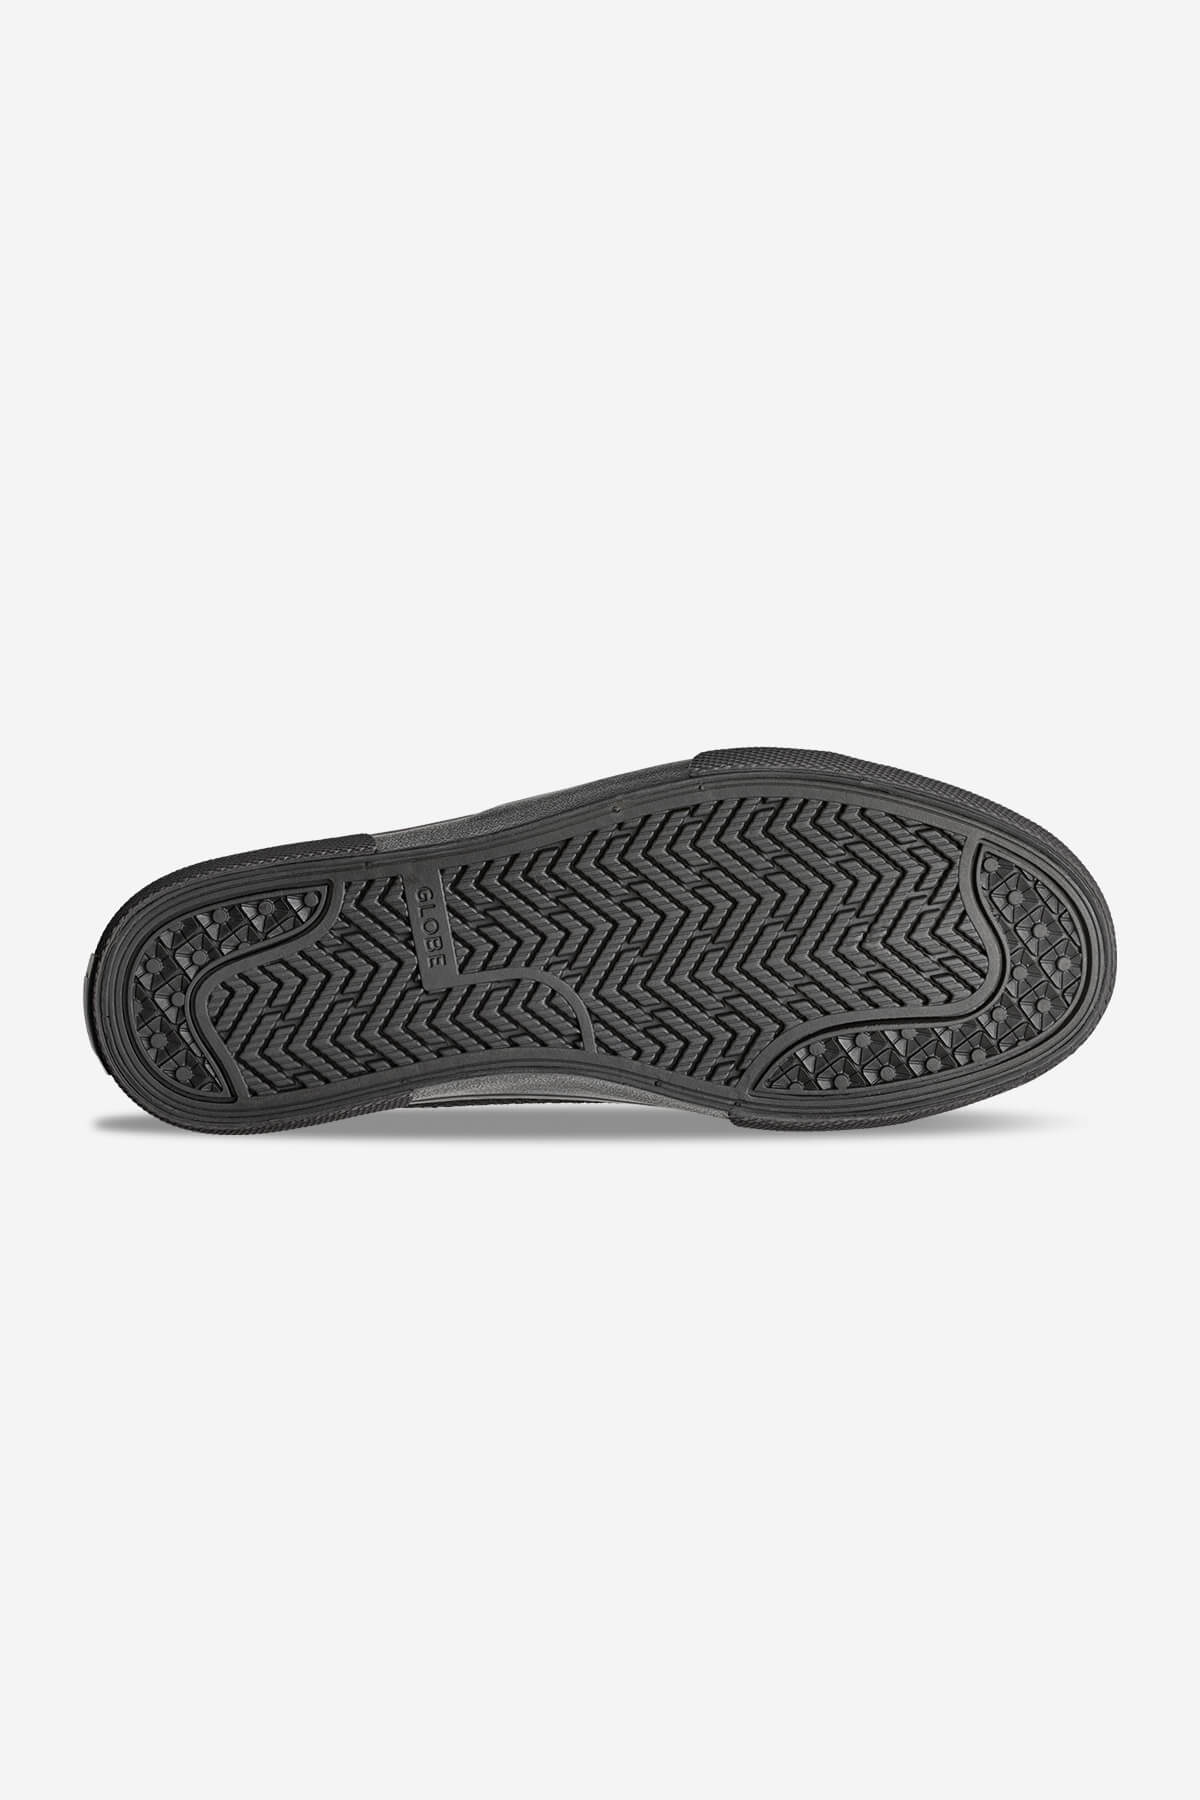 Globe - Surplus - Knit Negro/Knit/Negro - skateboard Zapatos